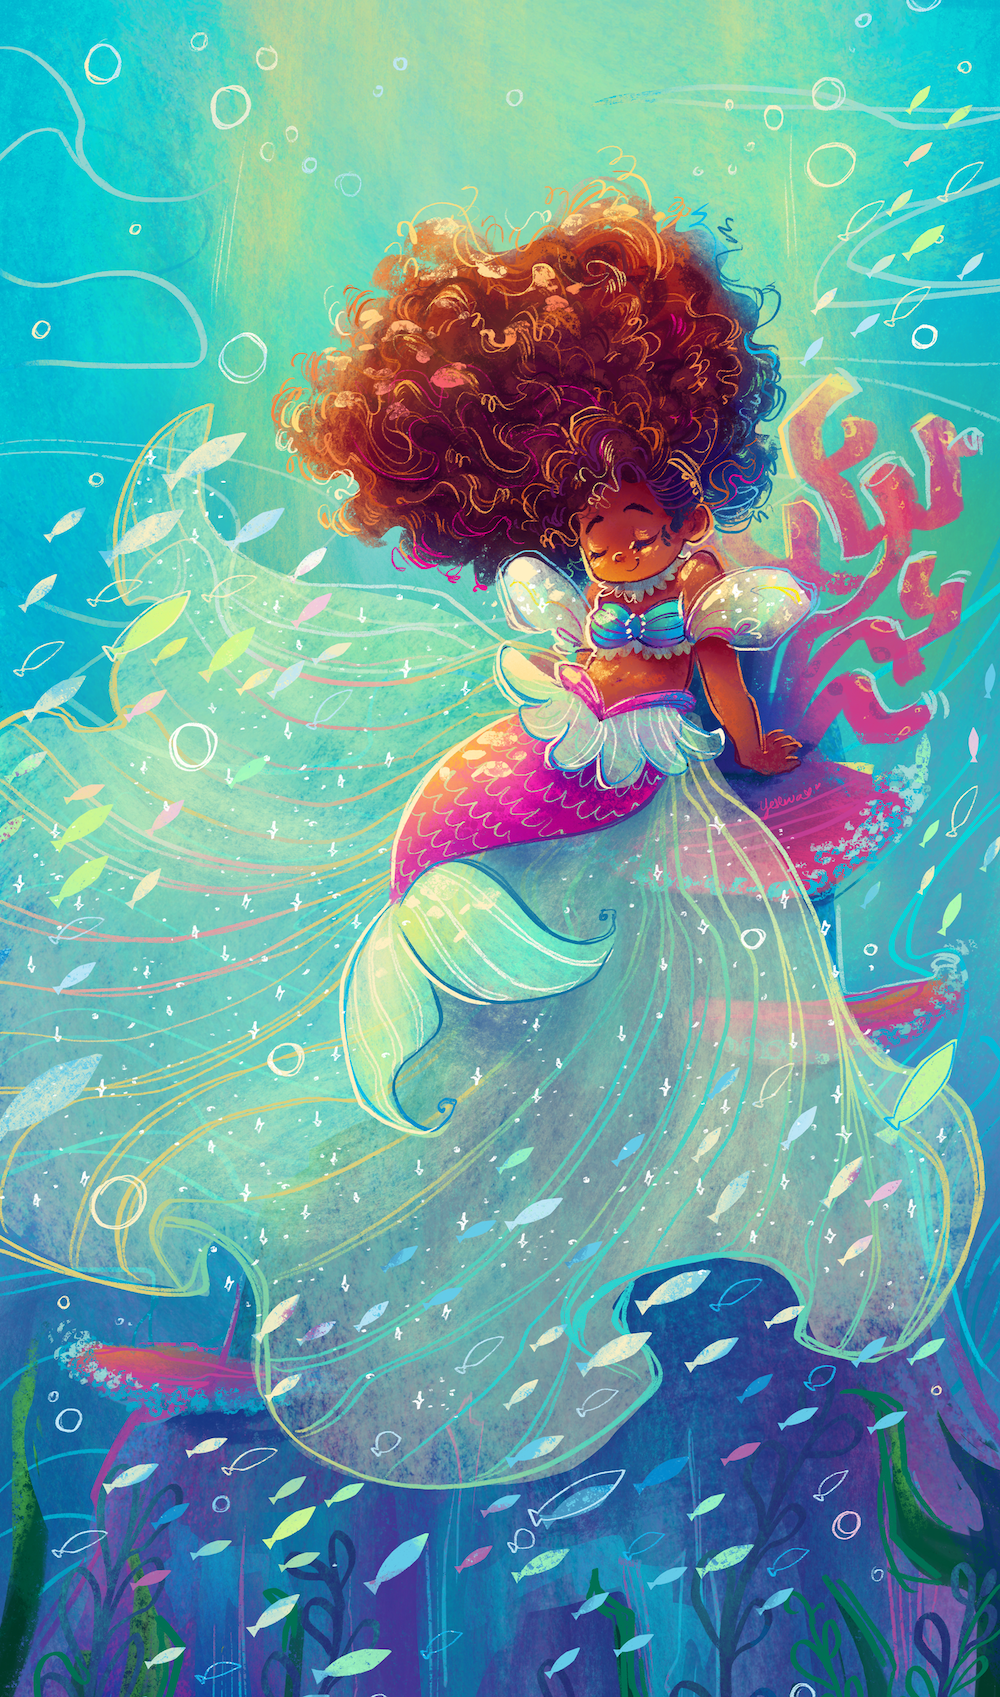 A vibrant illustration of a mermaid 